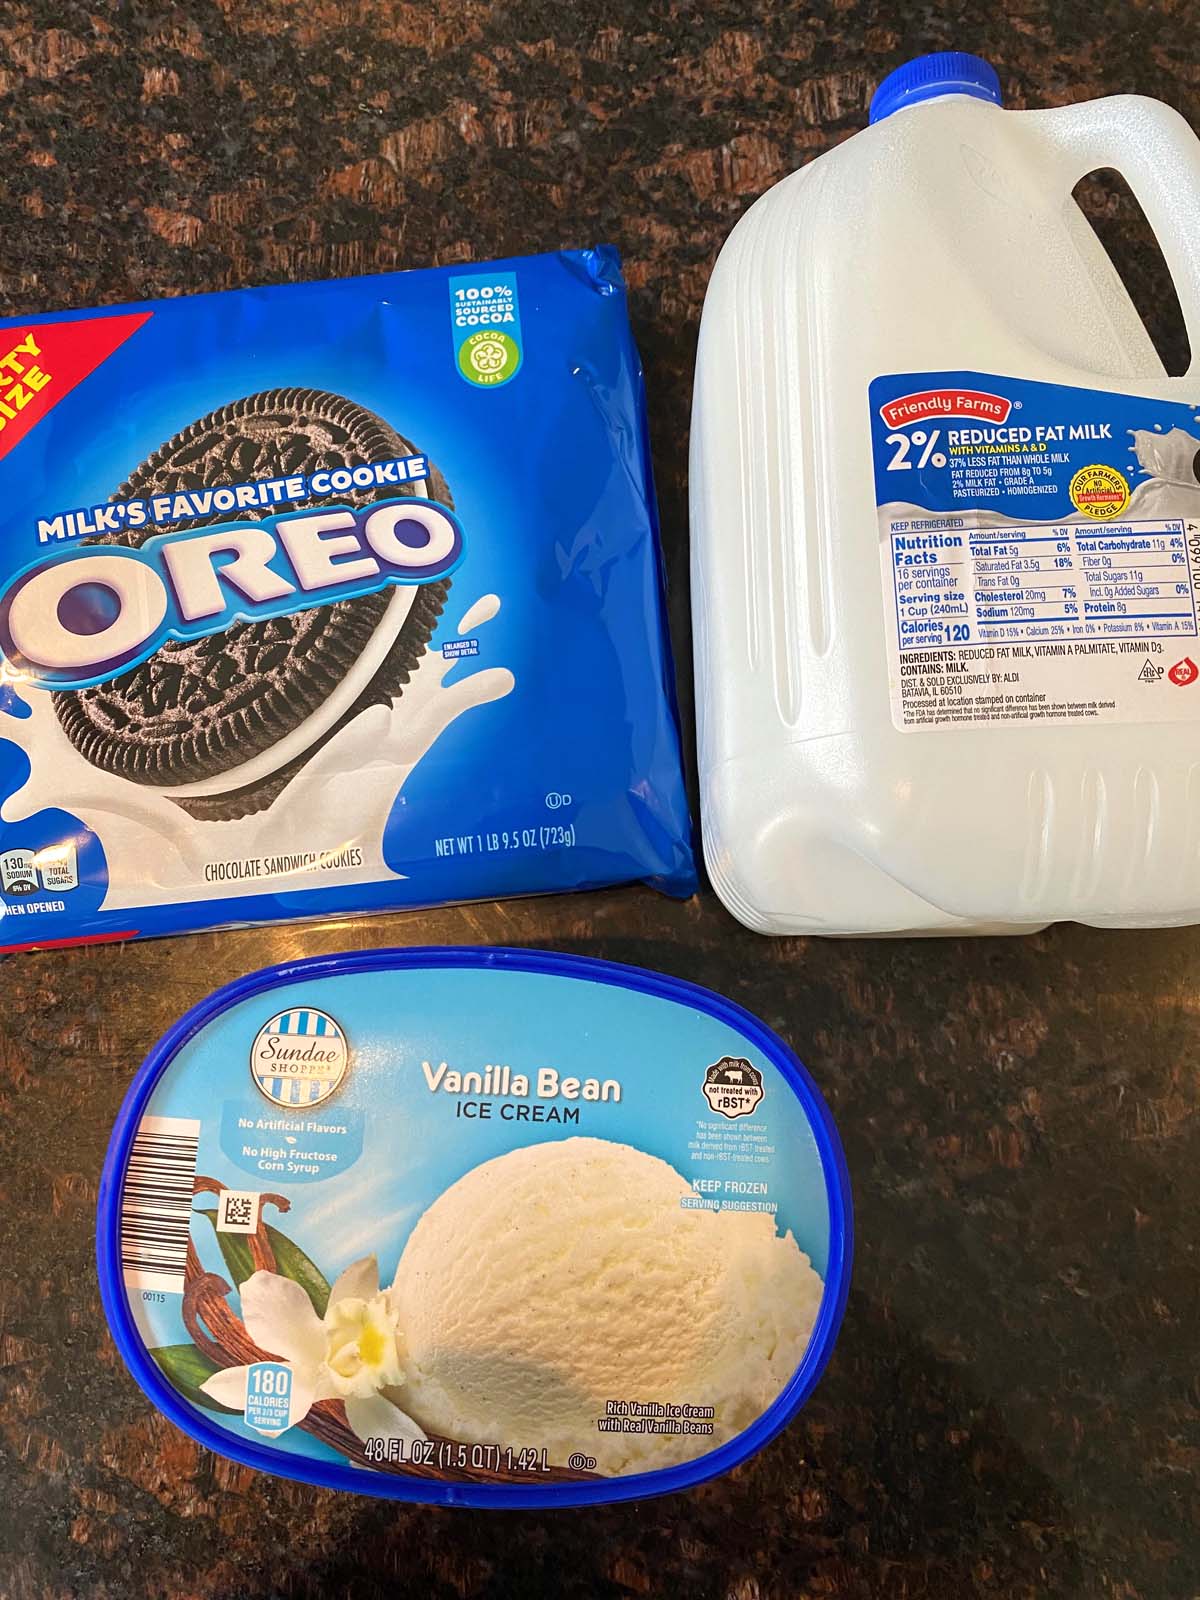 Package of Oreos, gallon of milk, and tub of vanilla ice cream.